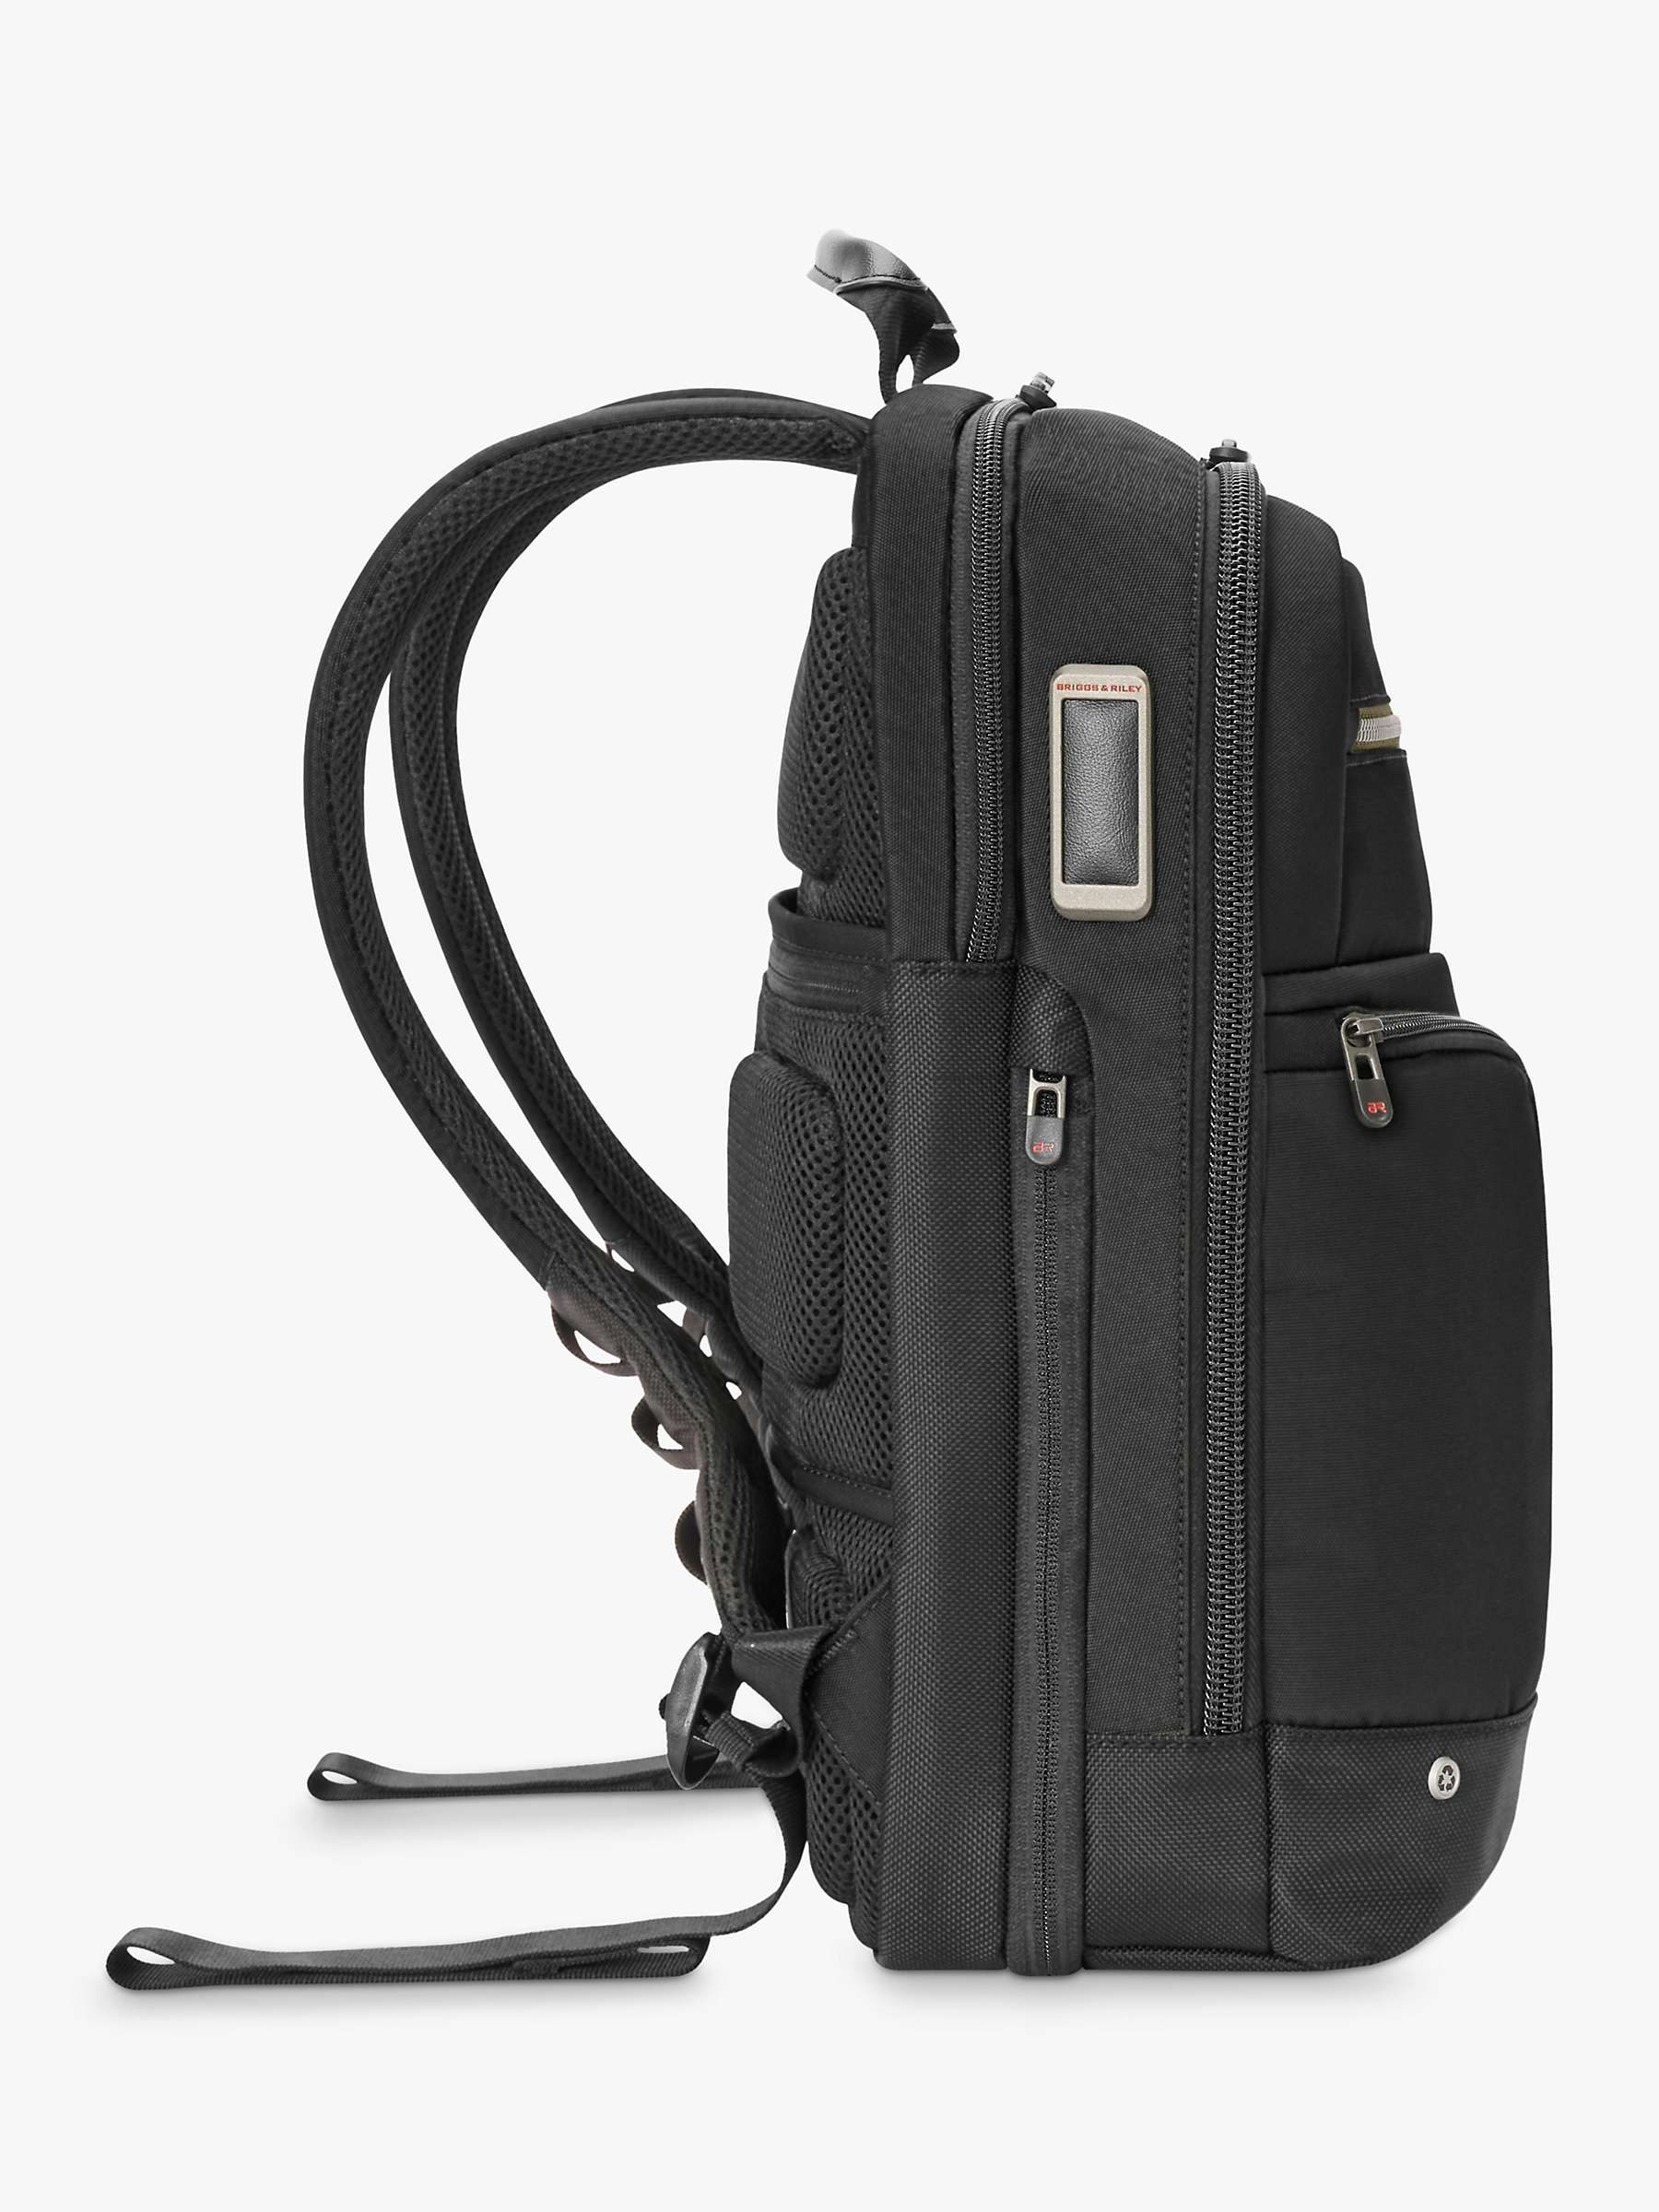 Buy Briggs & Riley HTA Slim Expandable Backpack Online at johnlewis.com